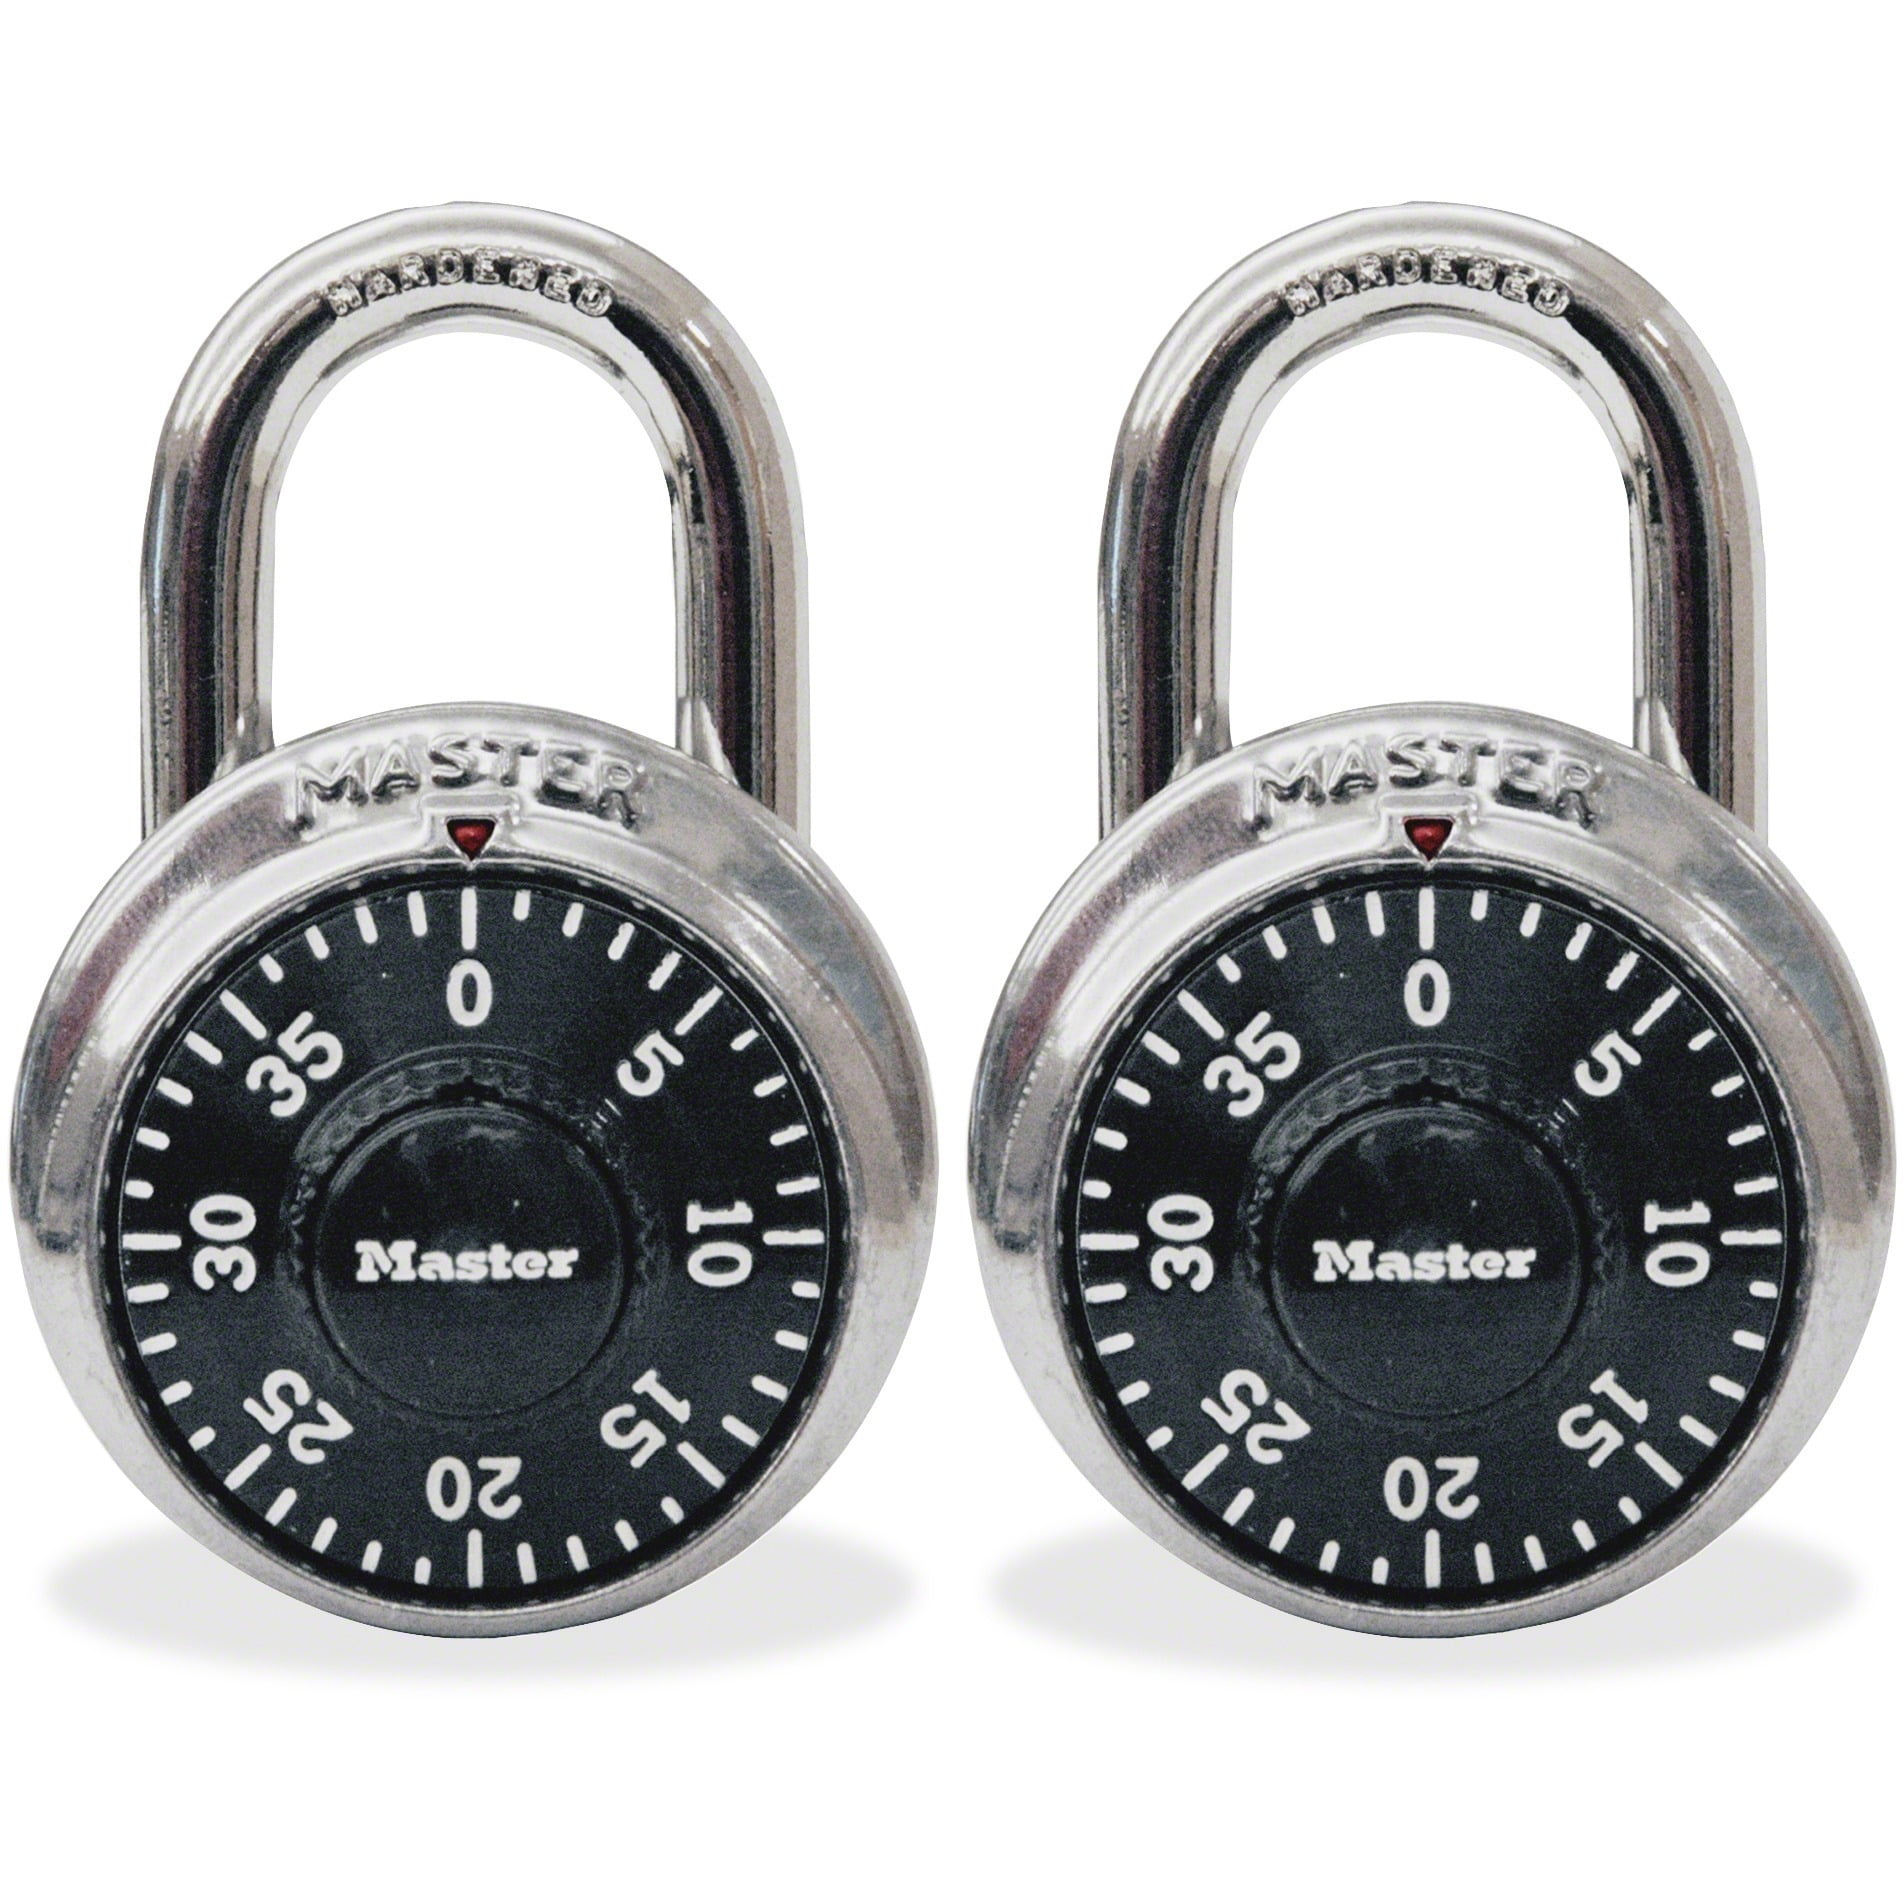 Master Lock 1500iDPNK Locker Lock Set Your Own Directional Combination  Padlock, 1 Pack, White/Pink